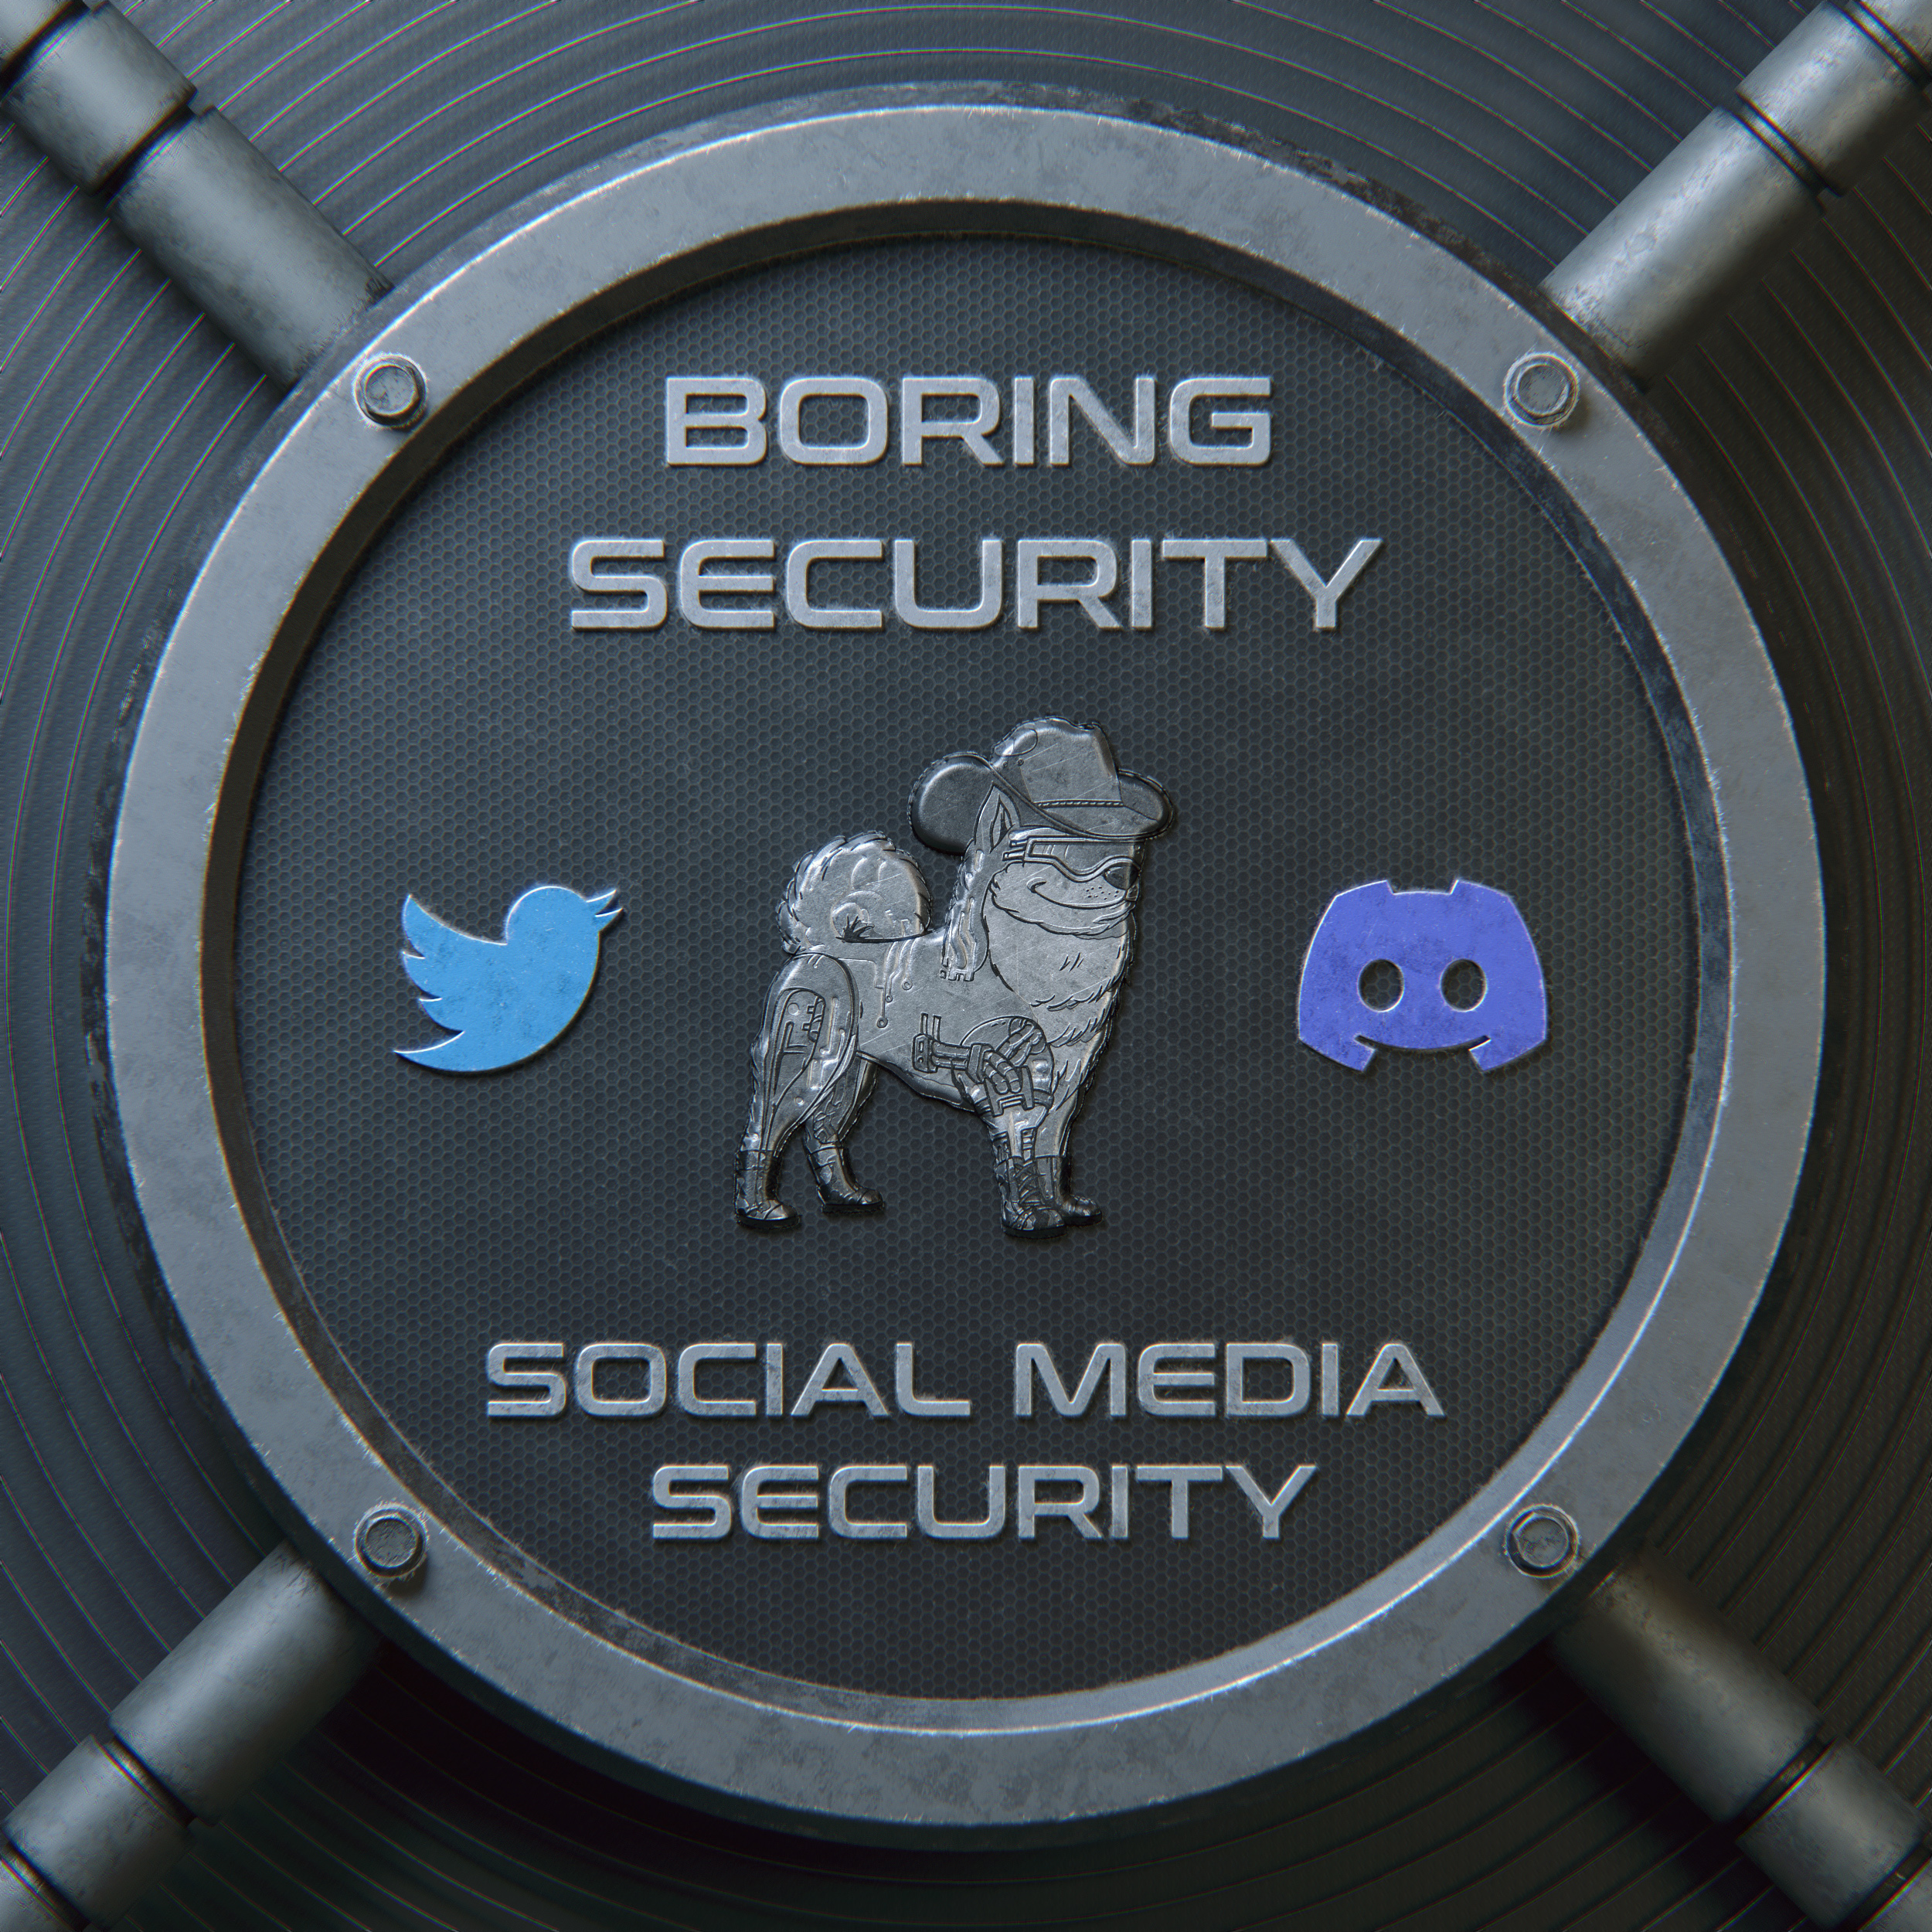 Boring Security's Social Media Security Graduate